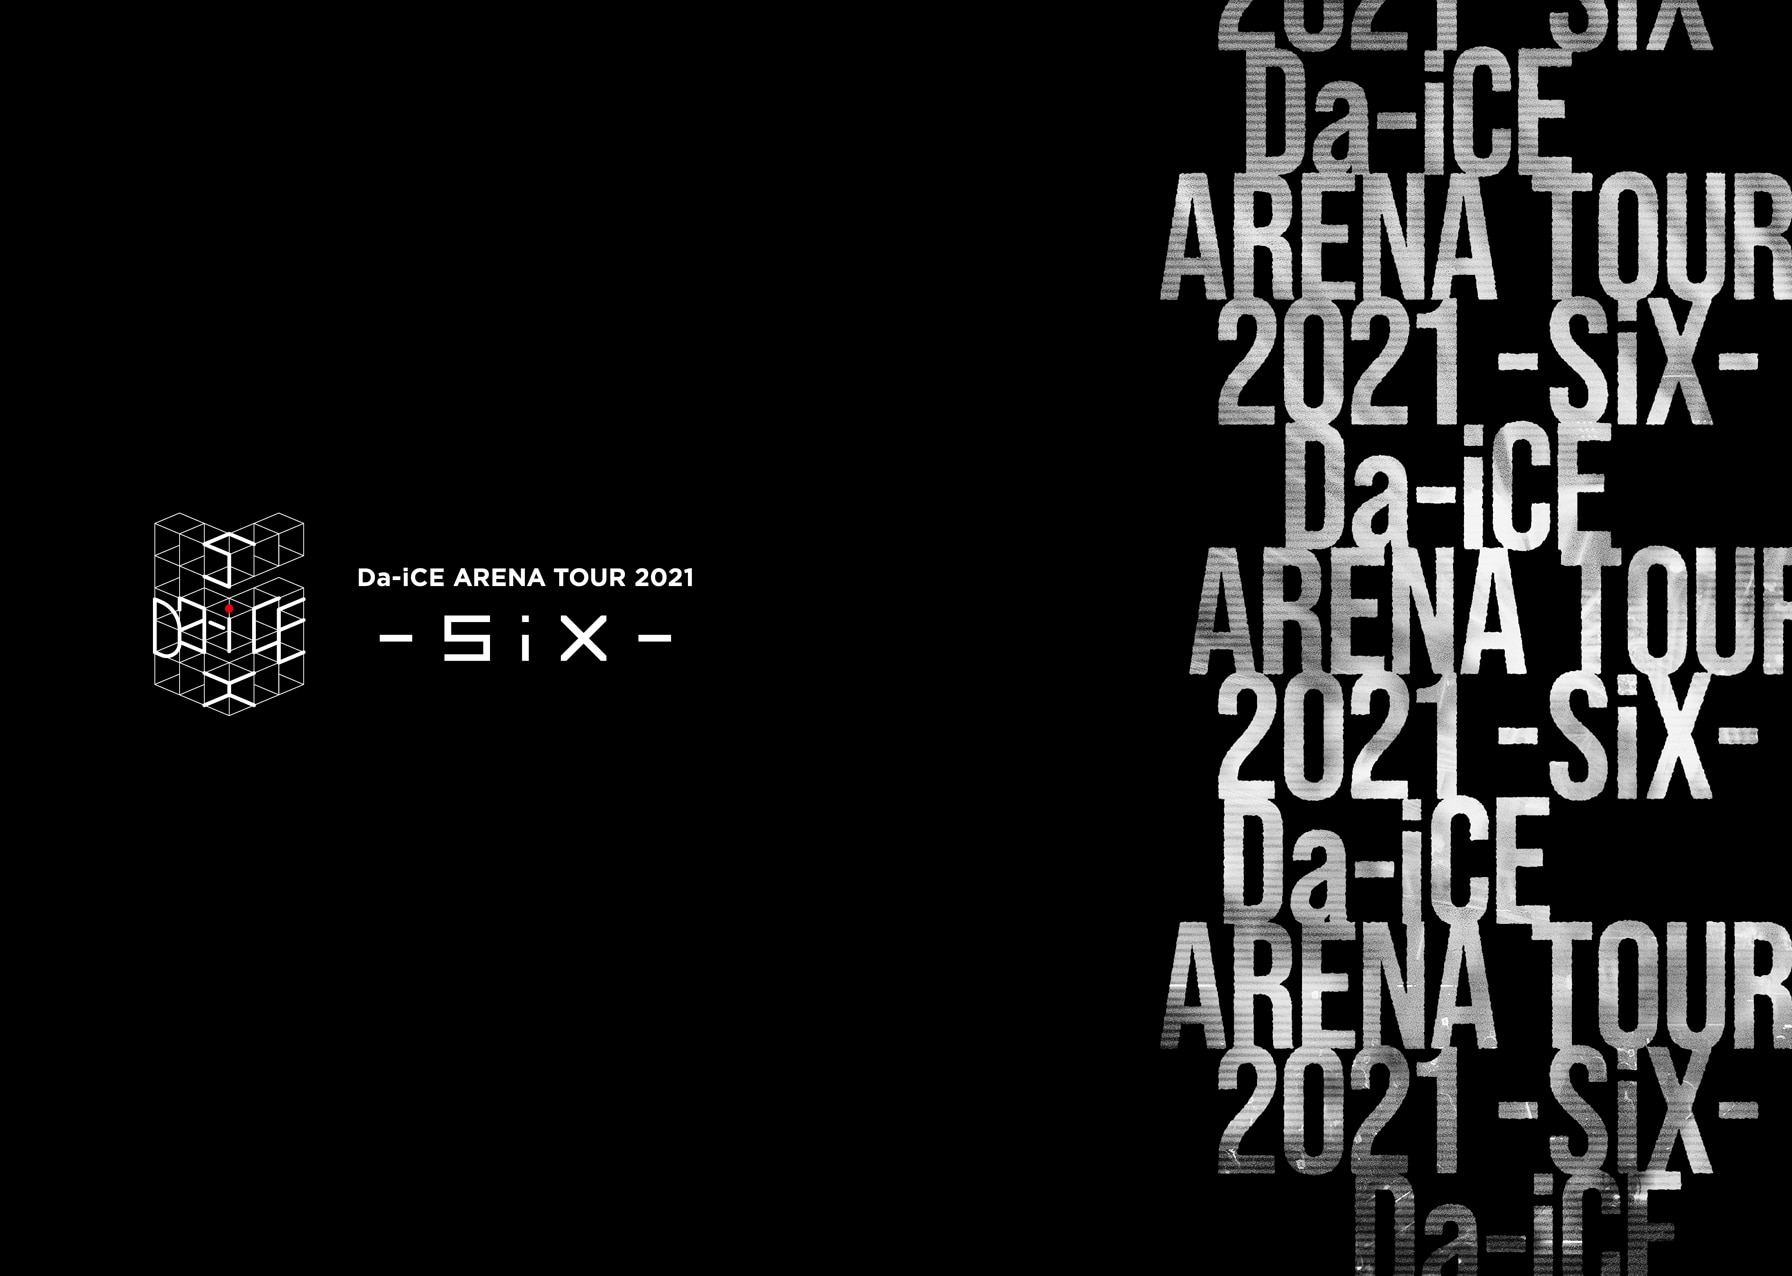 『Da-iCE ARENA TOUR 2021 -SiX-』